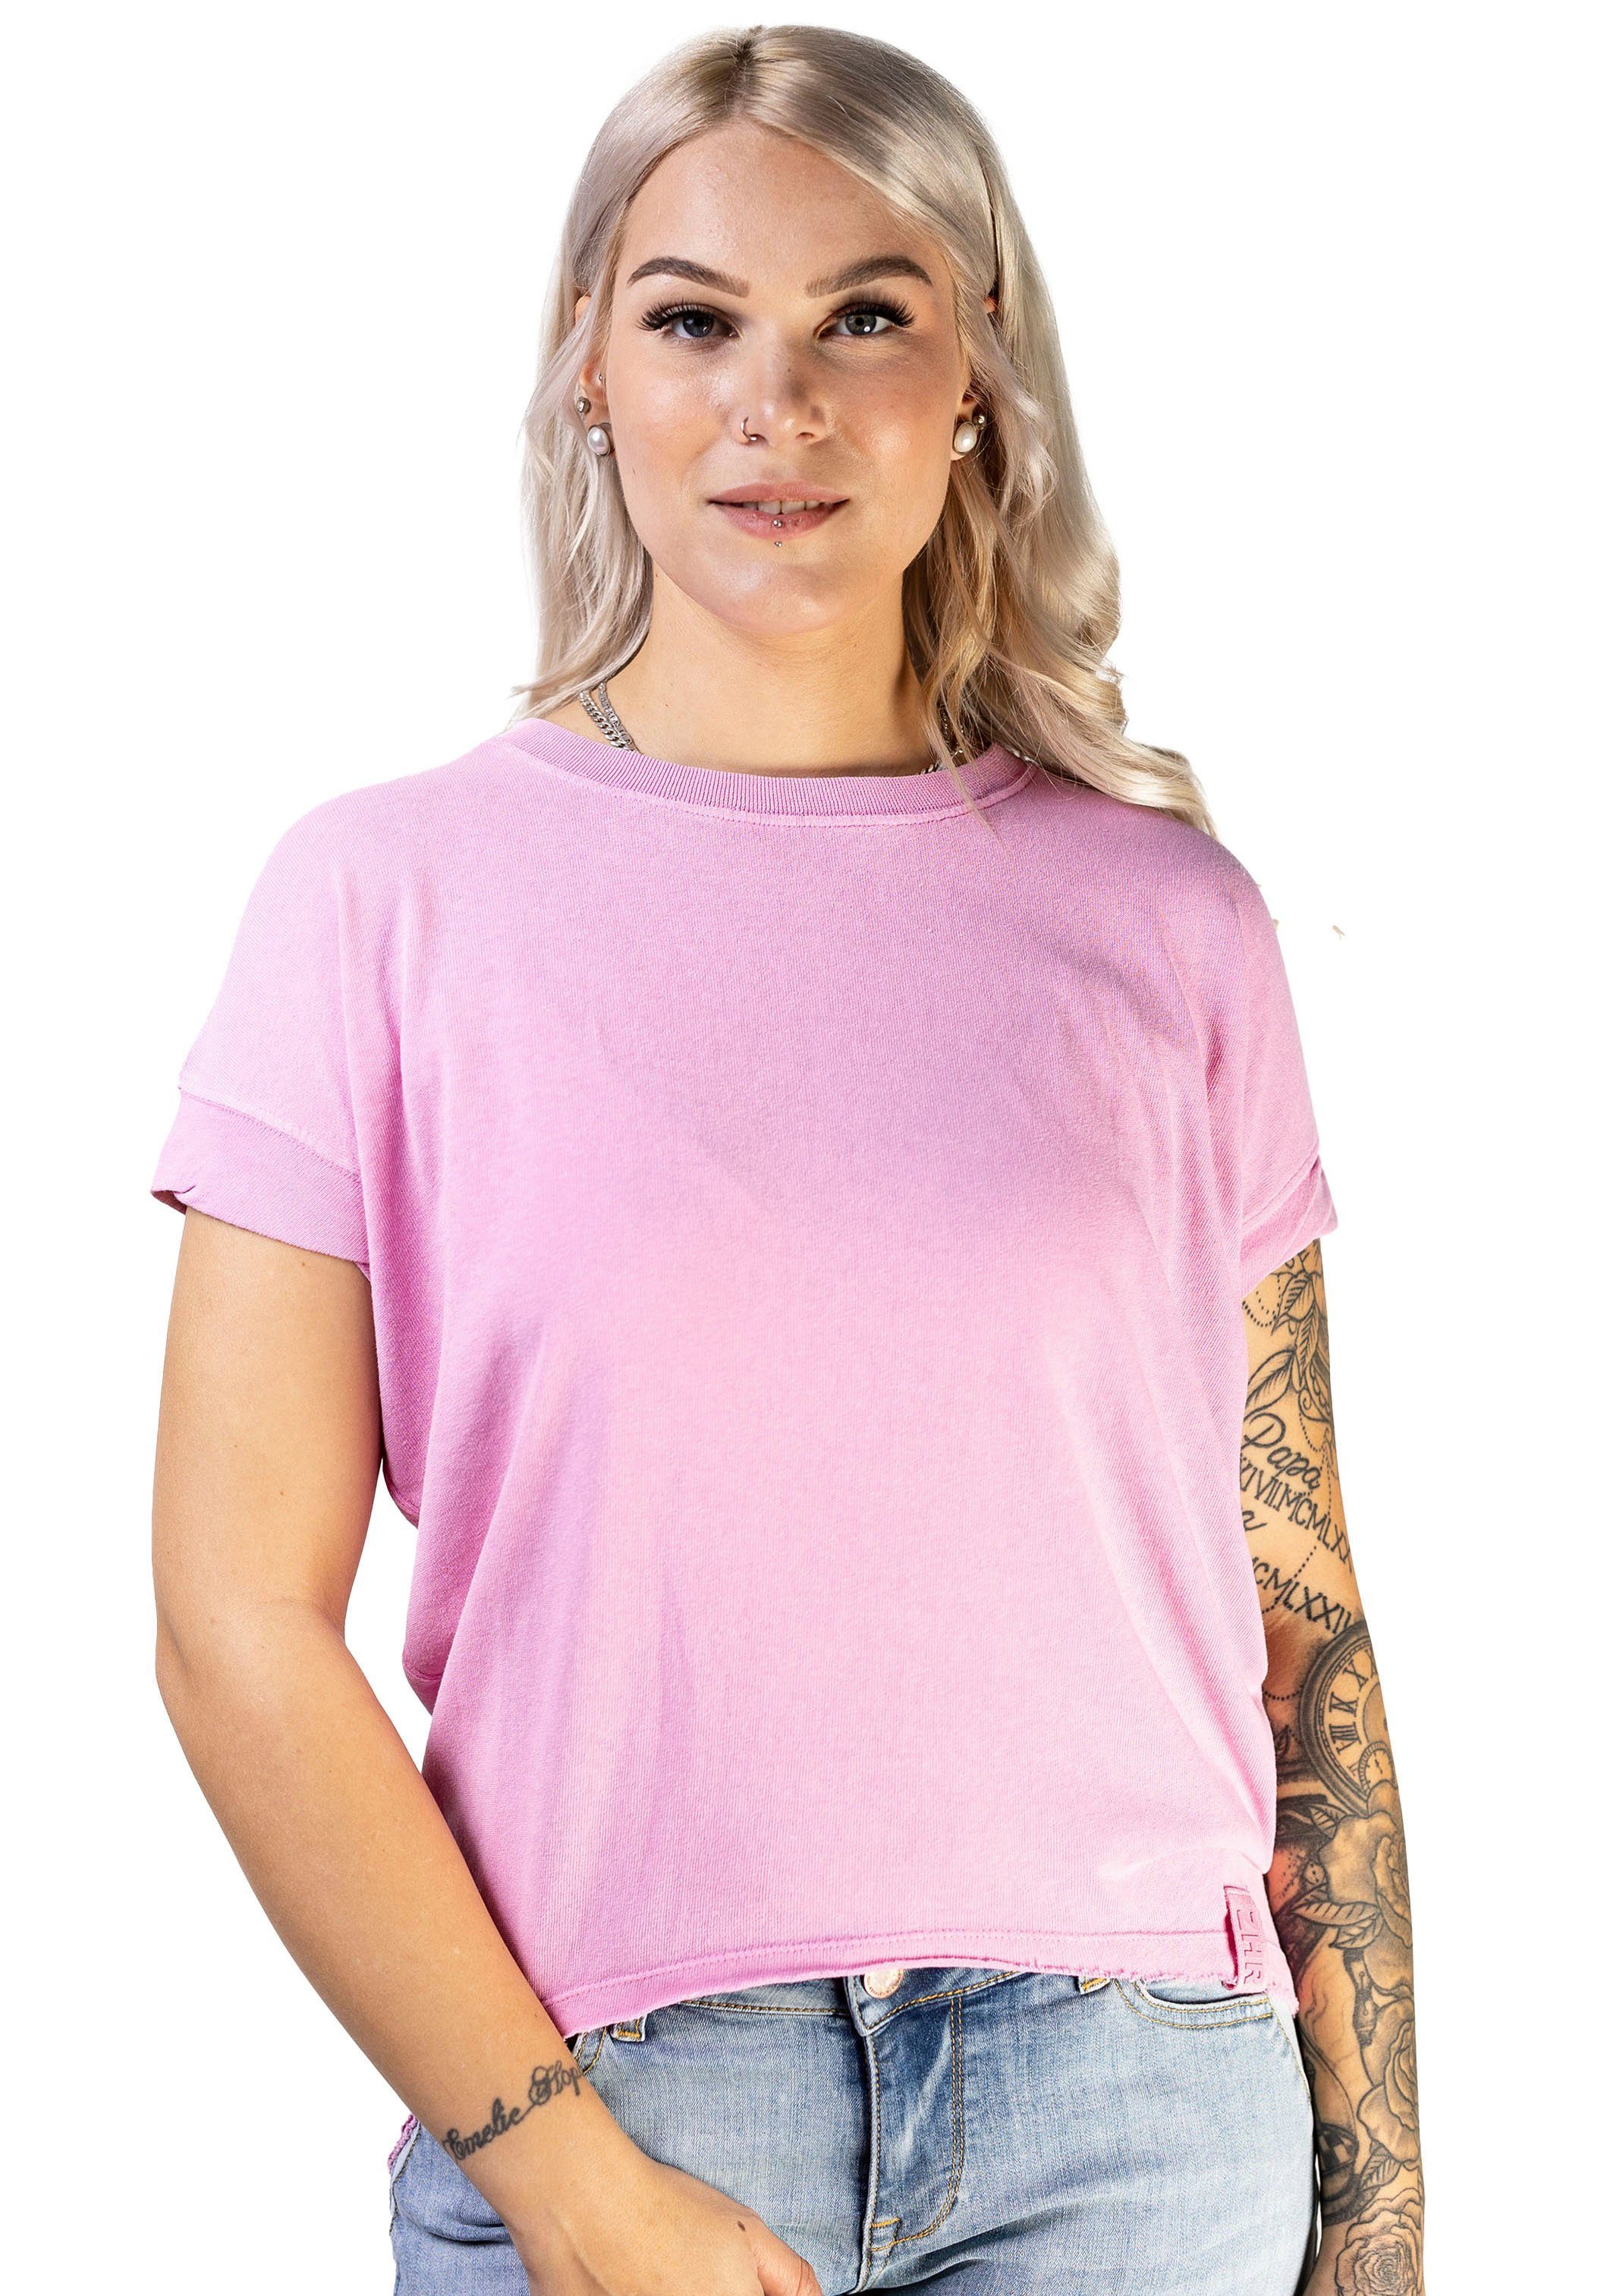 Zhrill rose T-Shirt